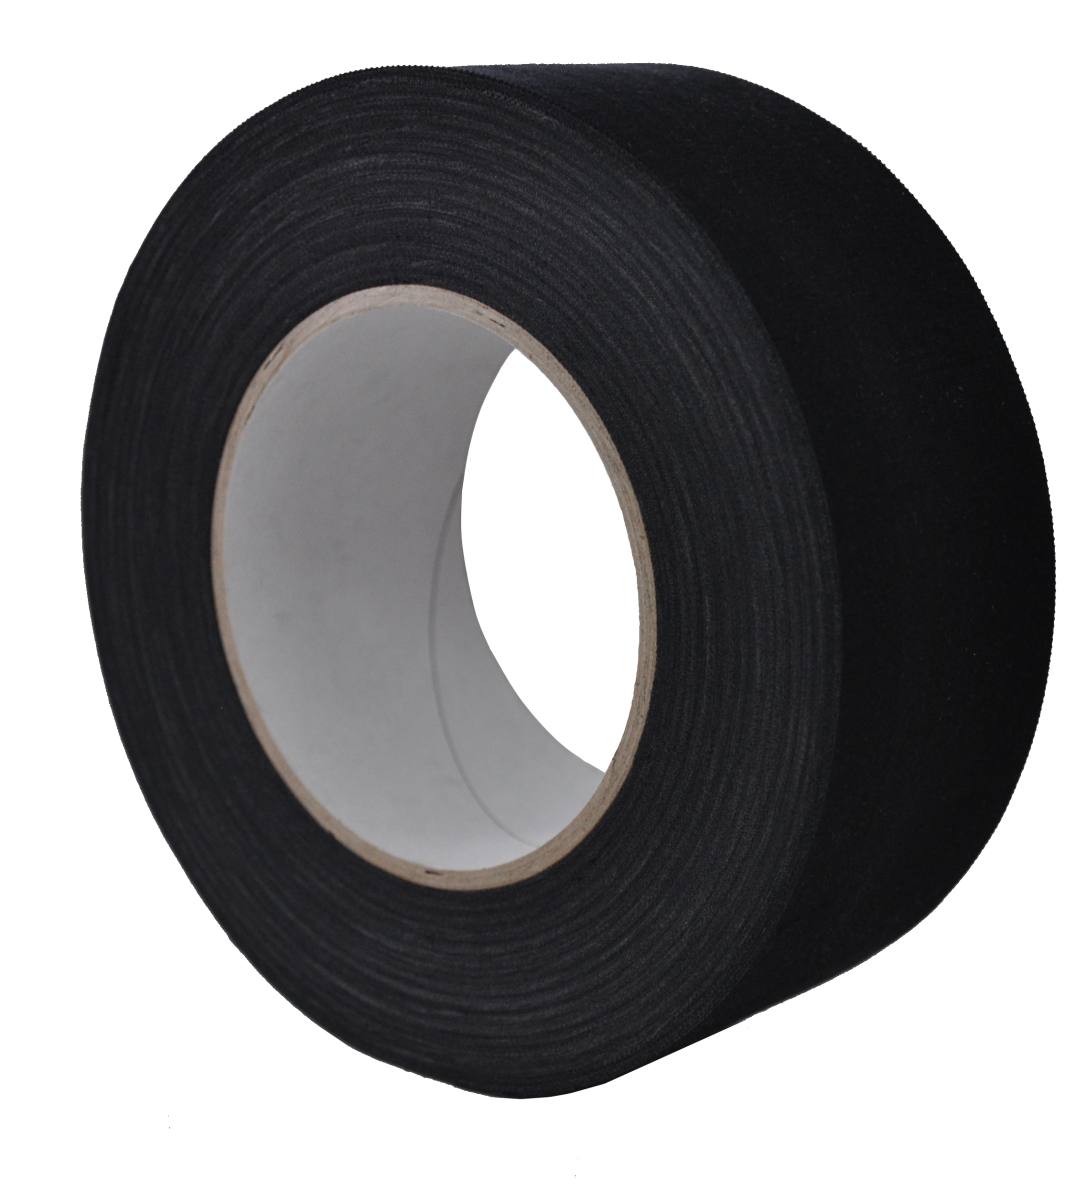 S-K-S 970 Raw fabric adhesive tape, 200 mm x 50 m, black, 0.240 mm